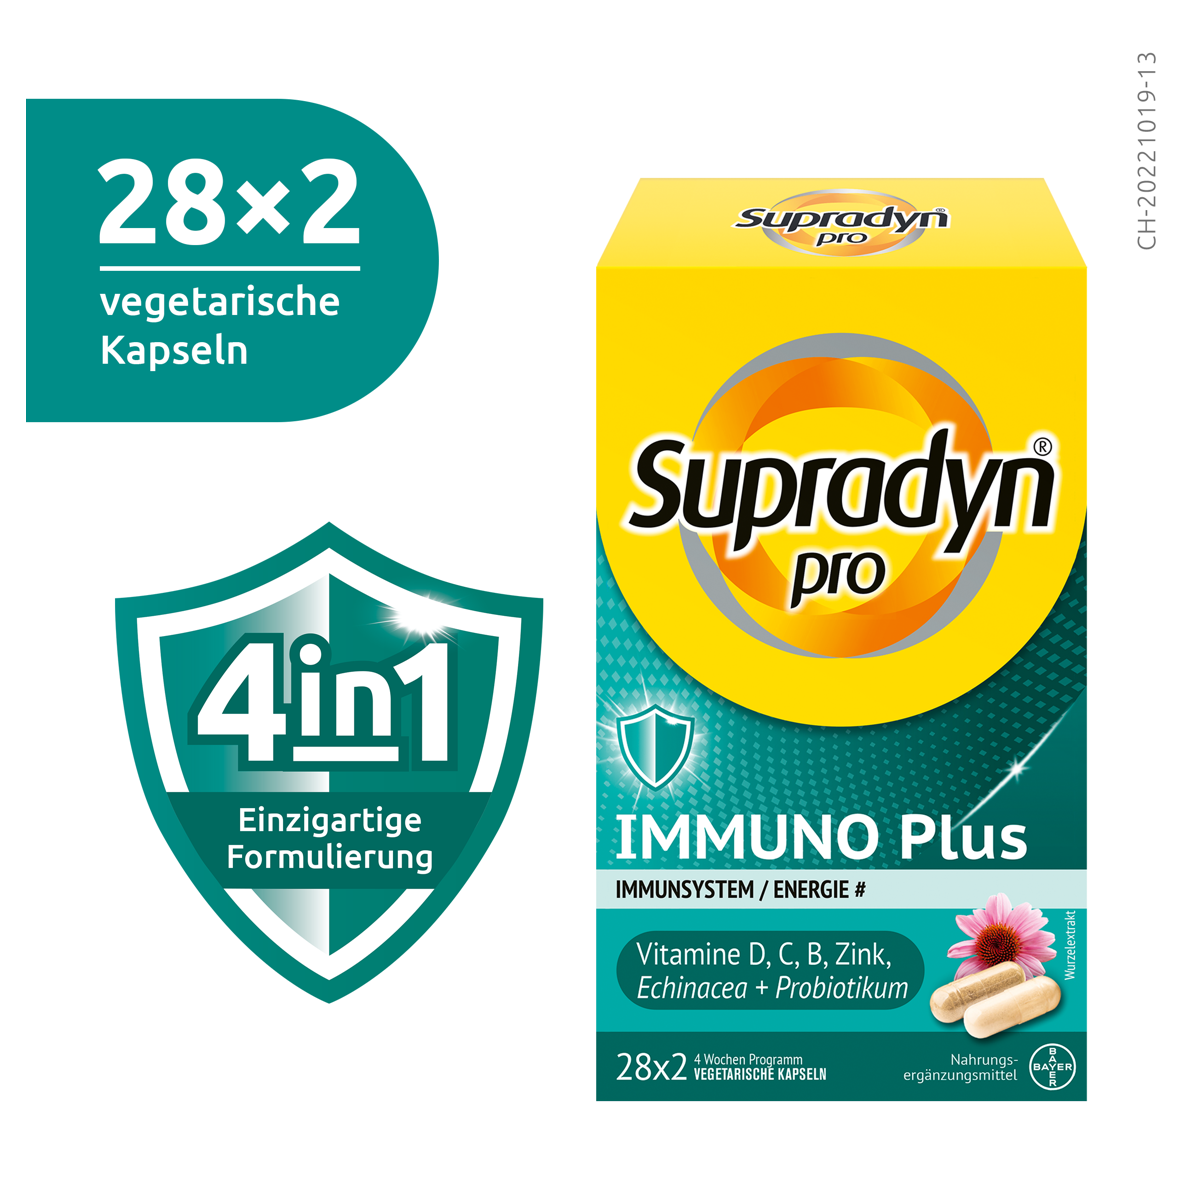 Supradyn Pro Immuno Plus Kapseln 4in1 vegetarische Kapseln